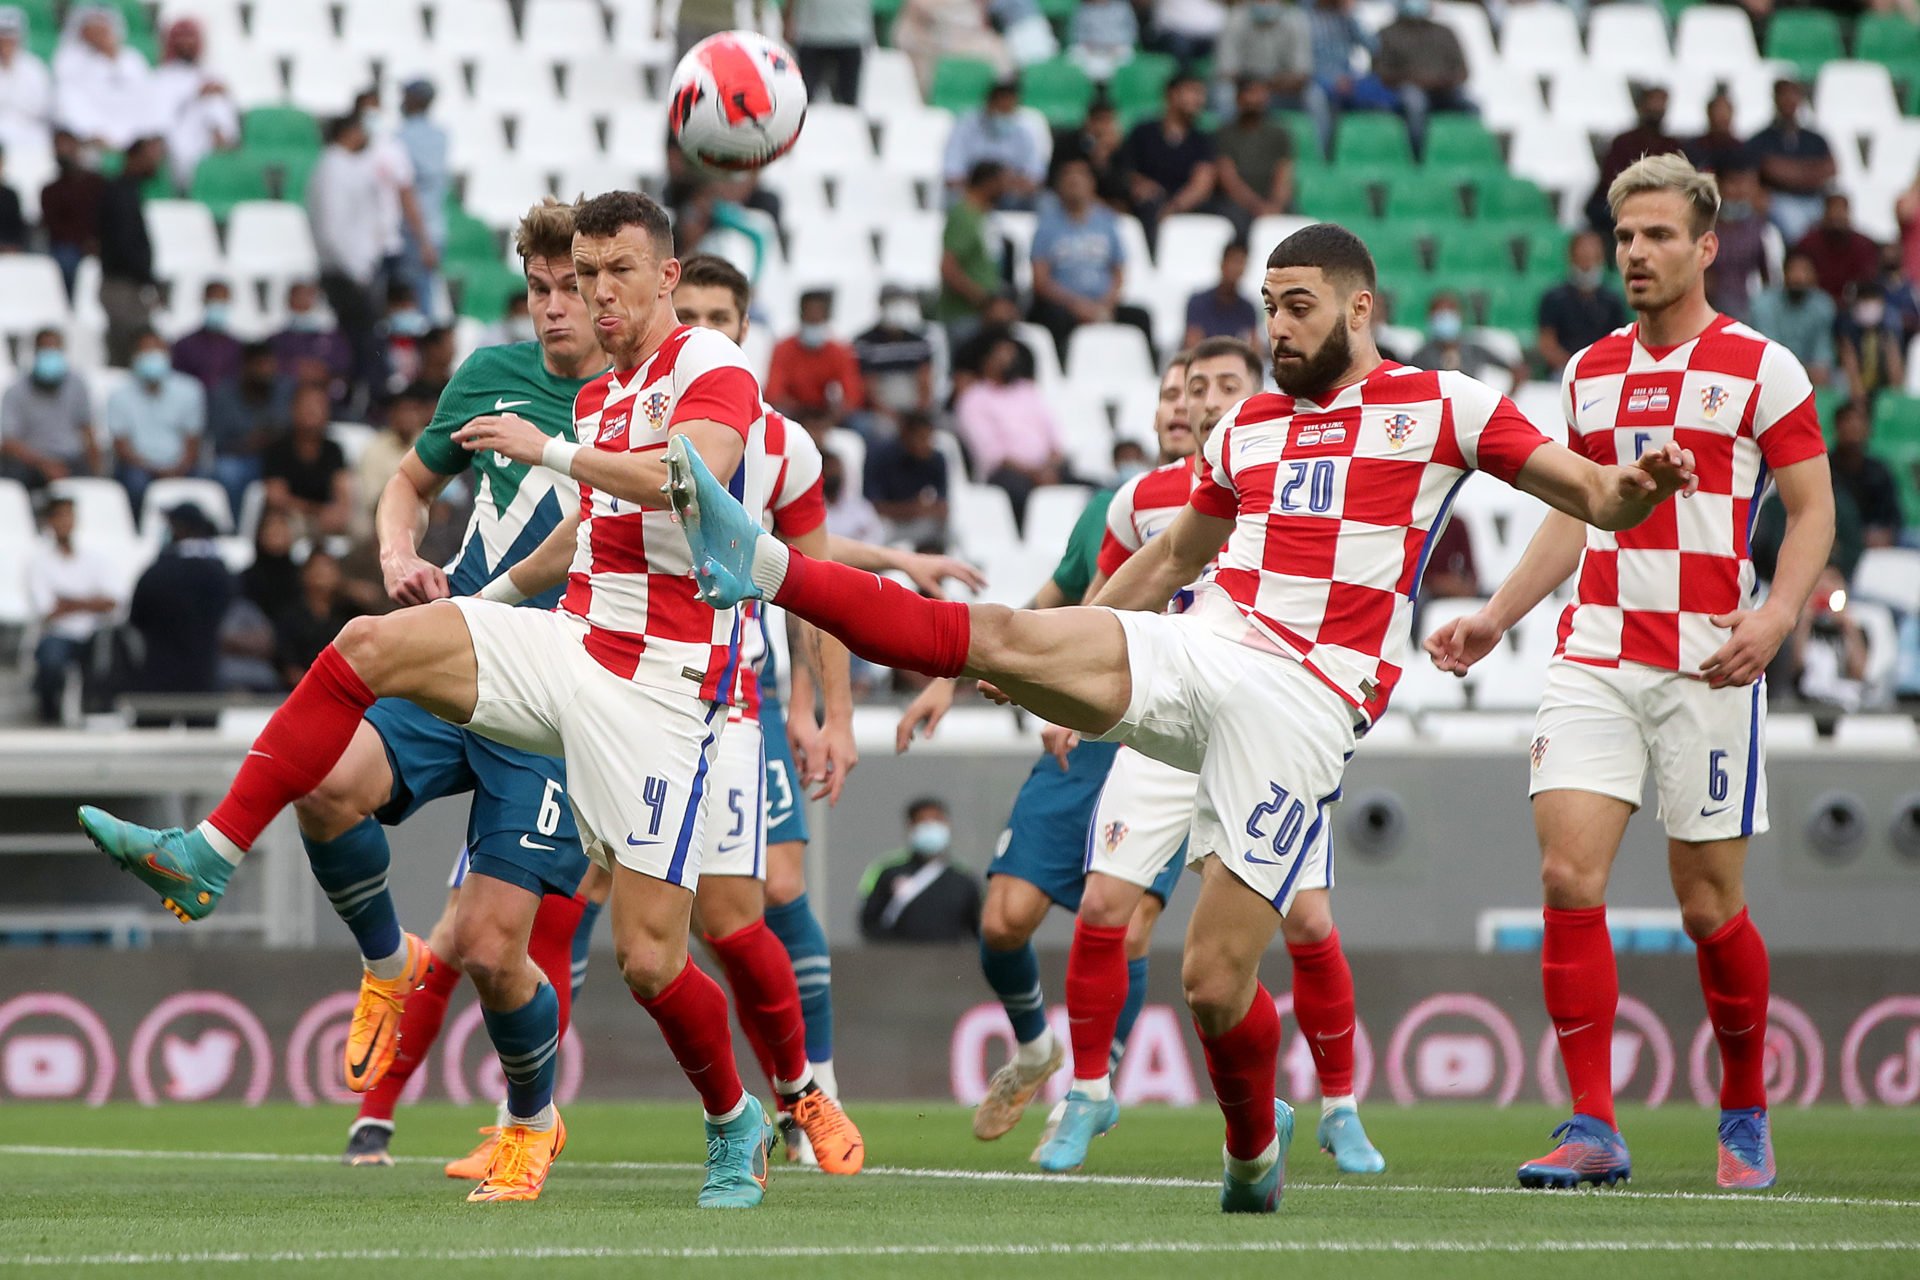 Croatia v Slovenia - International Friendly